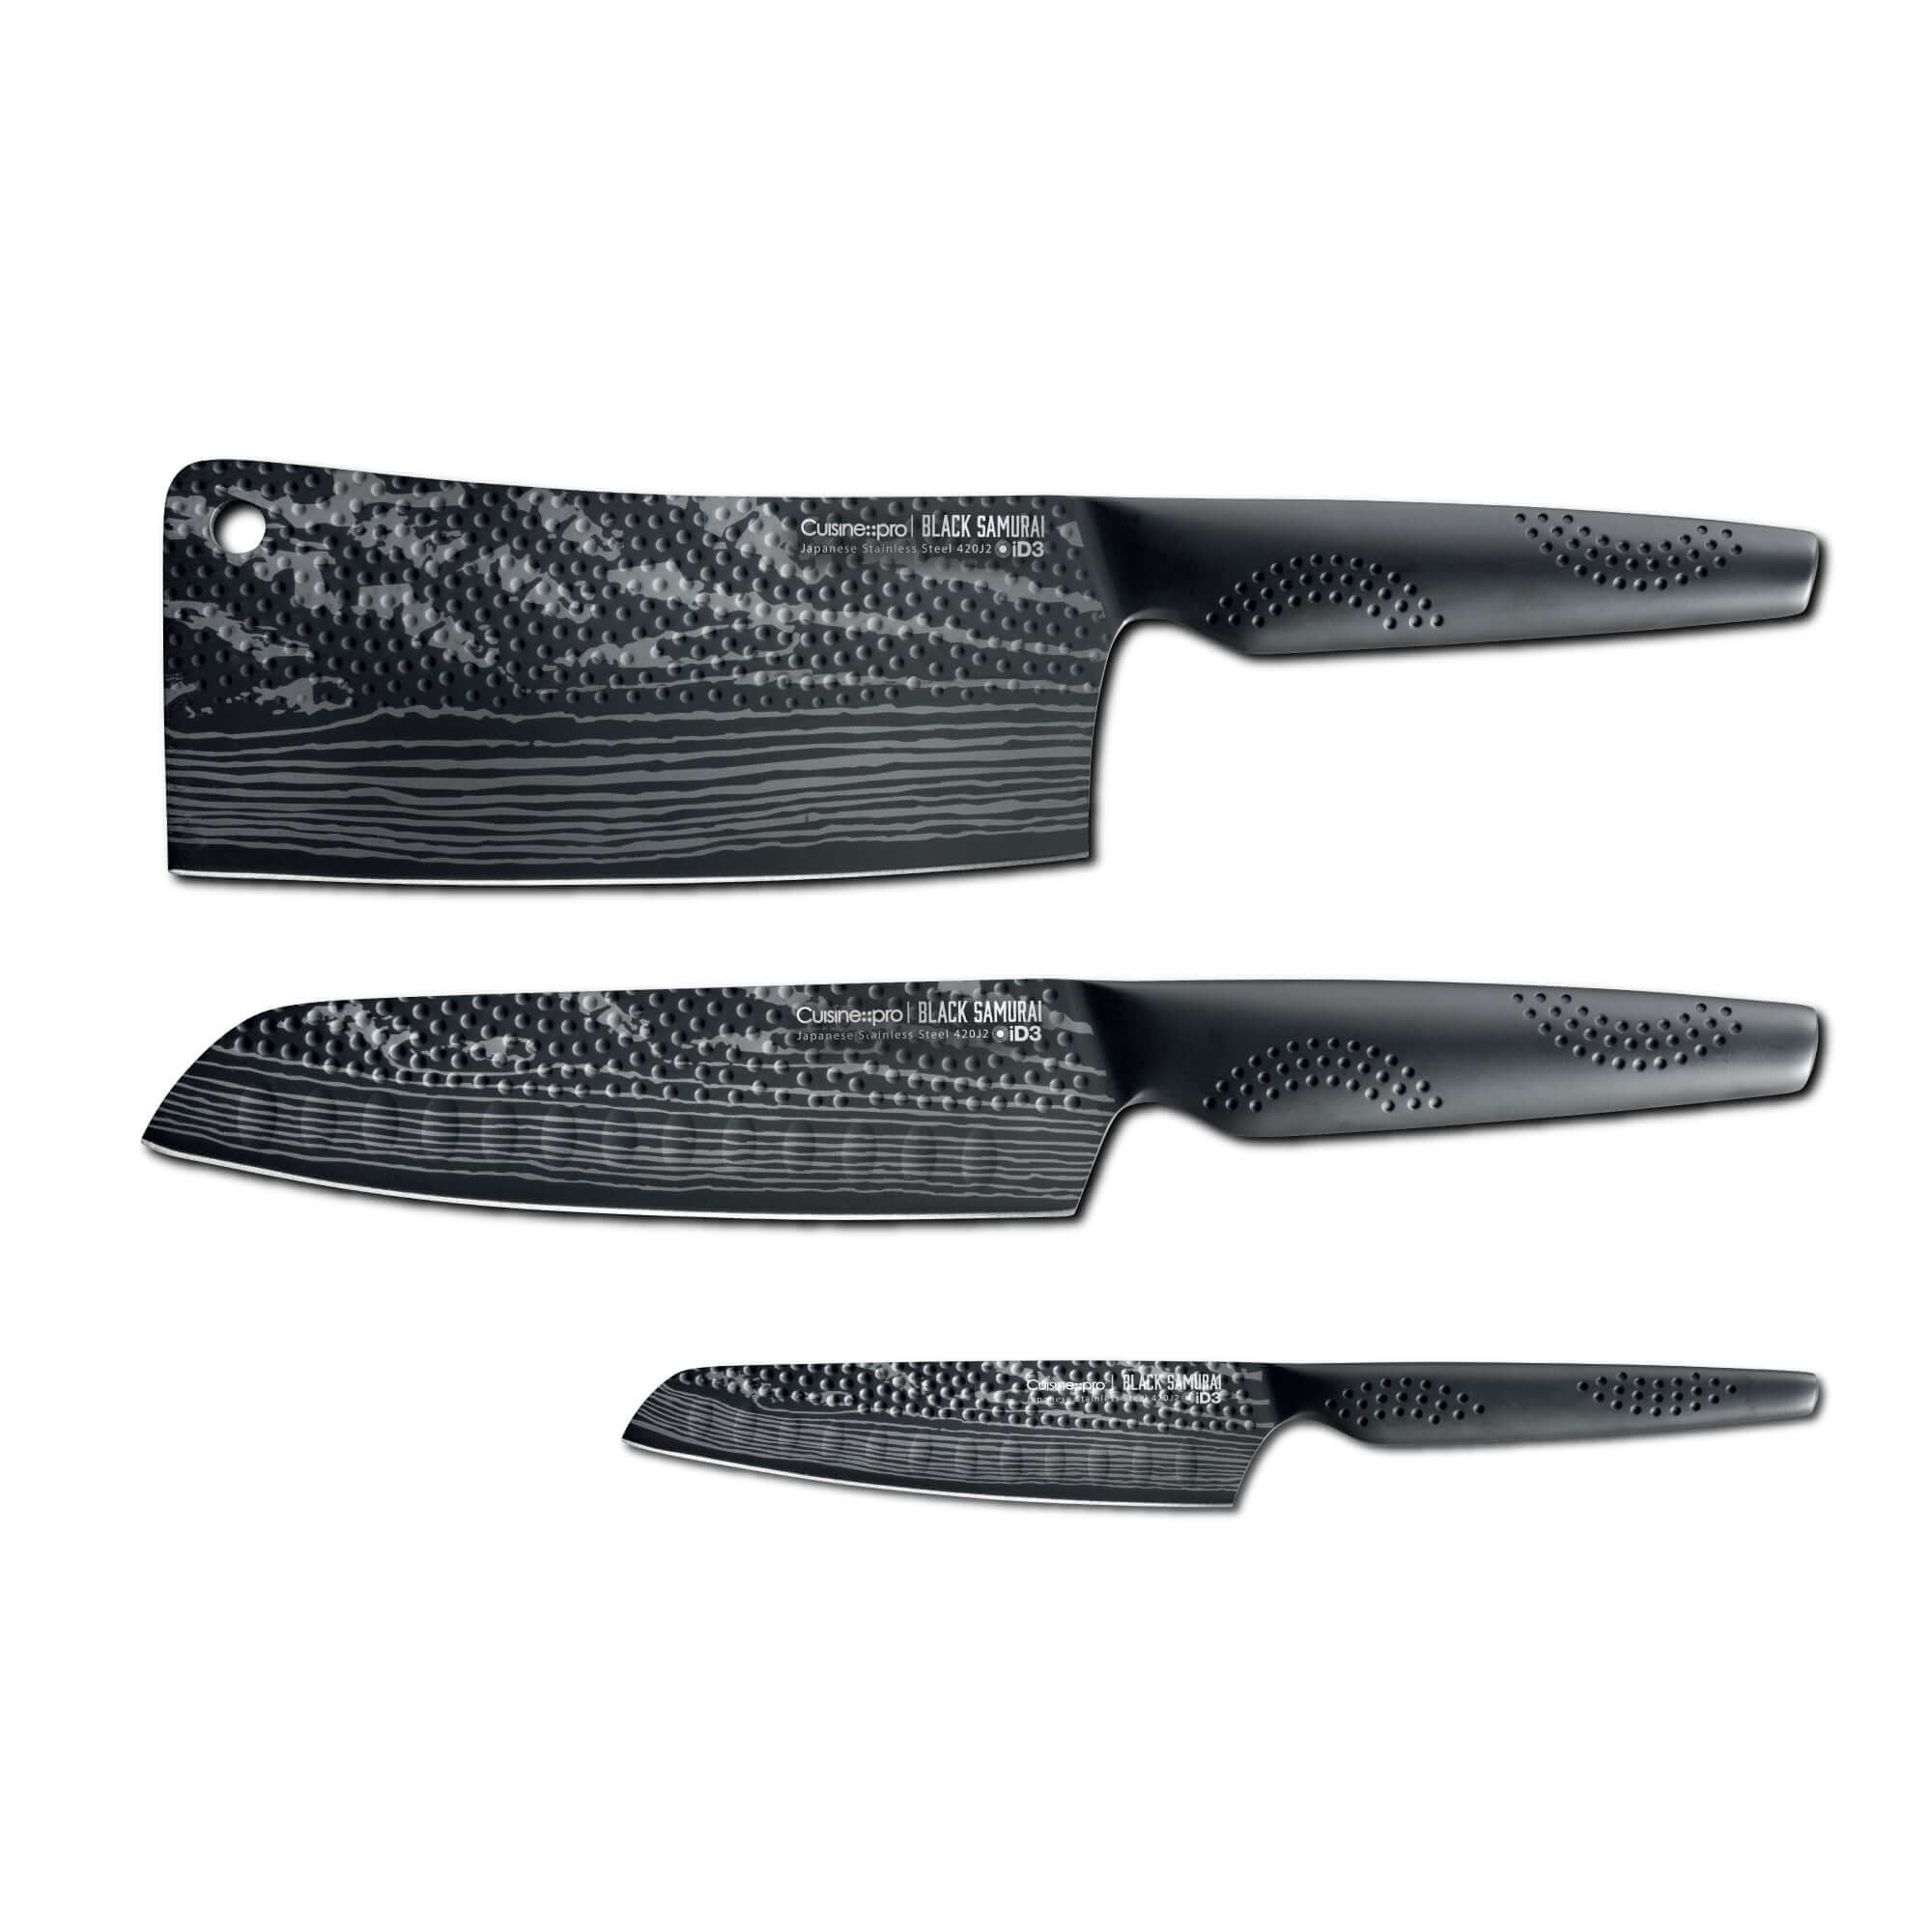 Cuisine::pro iD3 BLACK SAMURAI 7-Piece Stainless Steel Knife Set